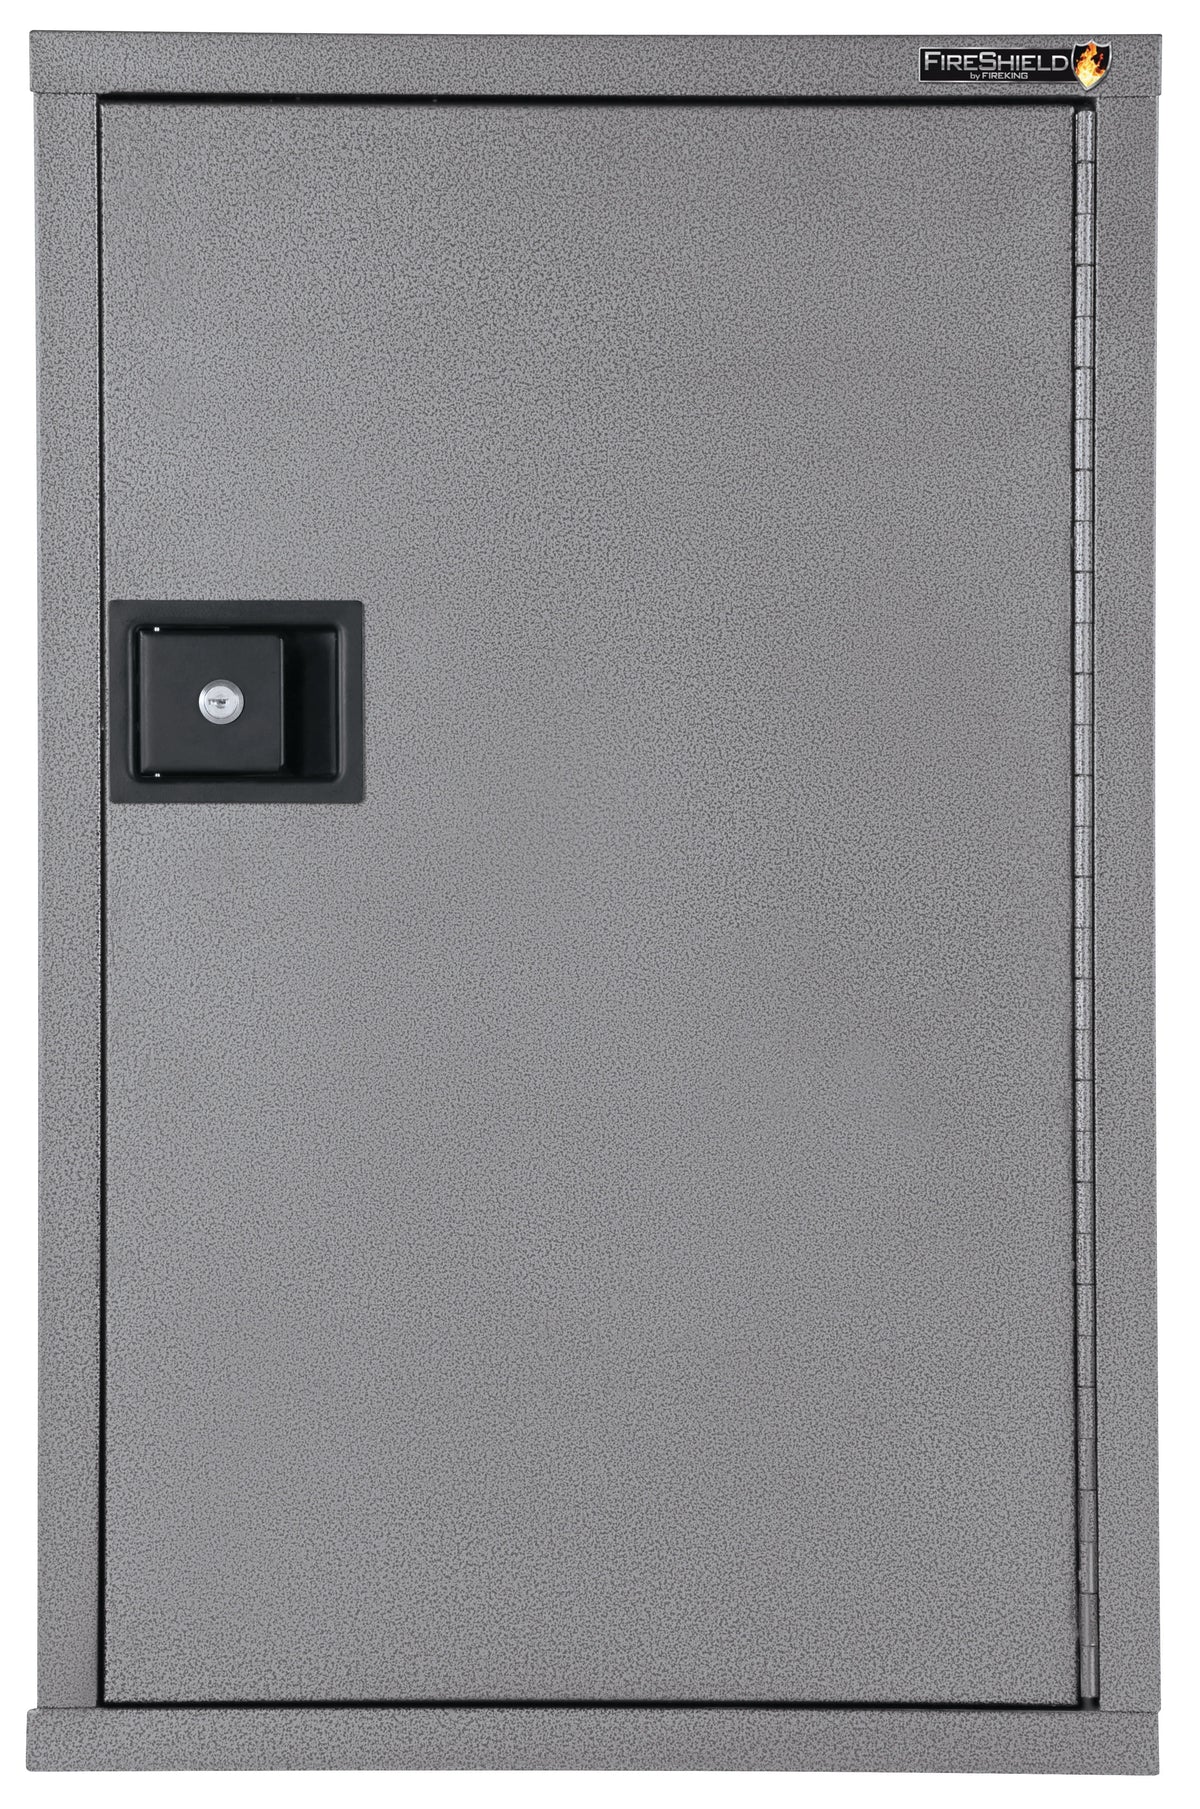 FireKing HSC-3422-D FireShield Storage Cabinet Silver Front